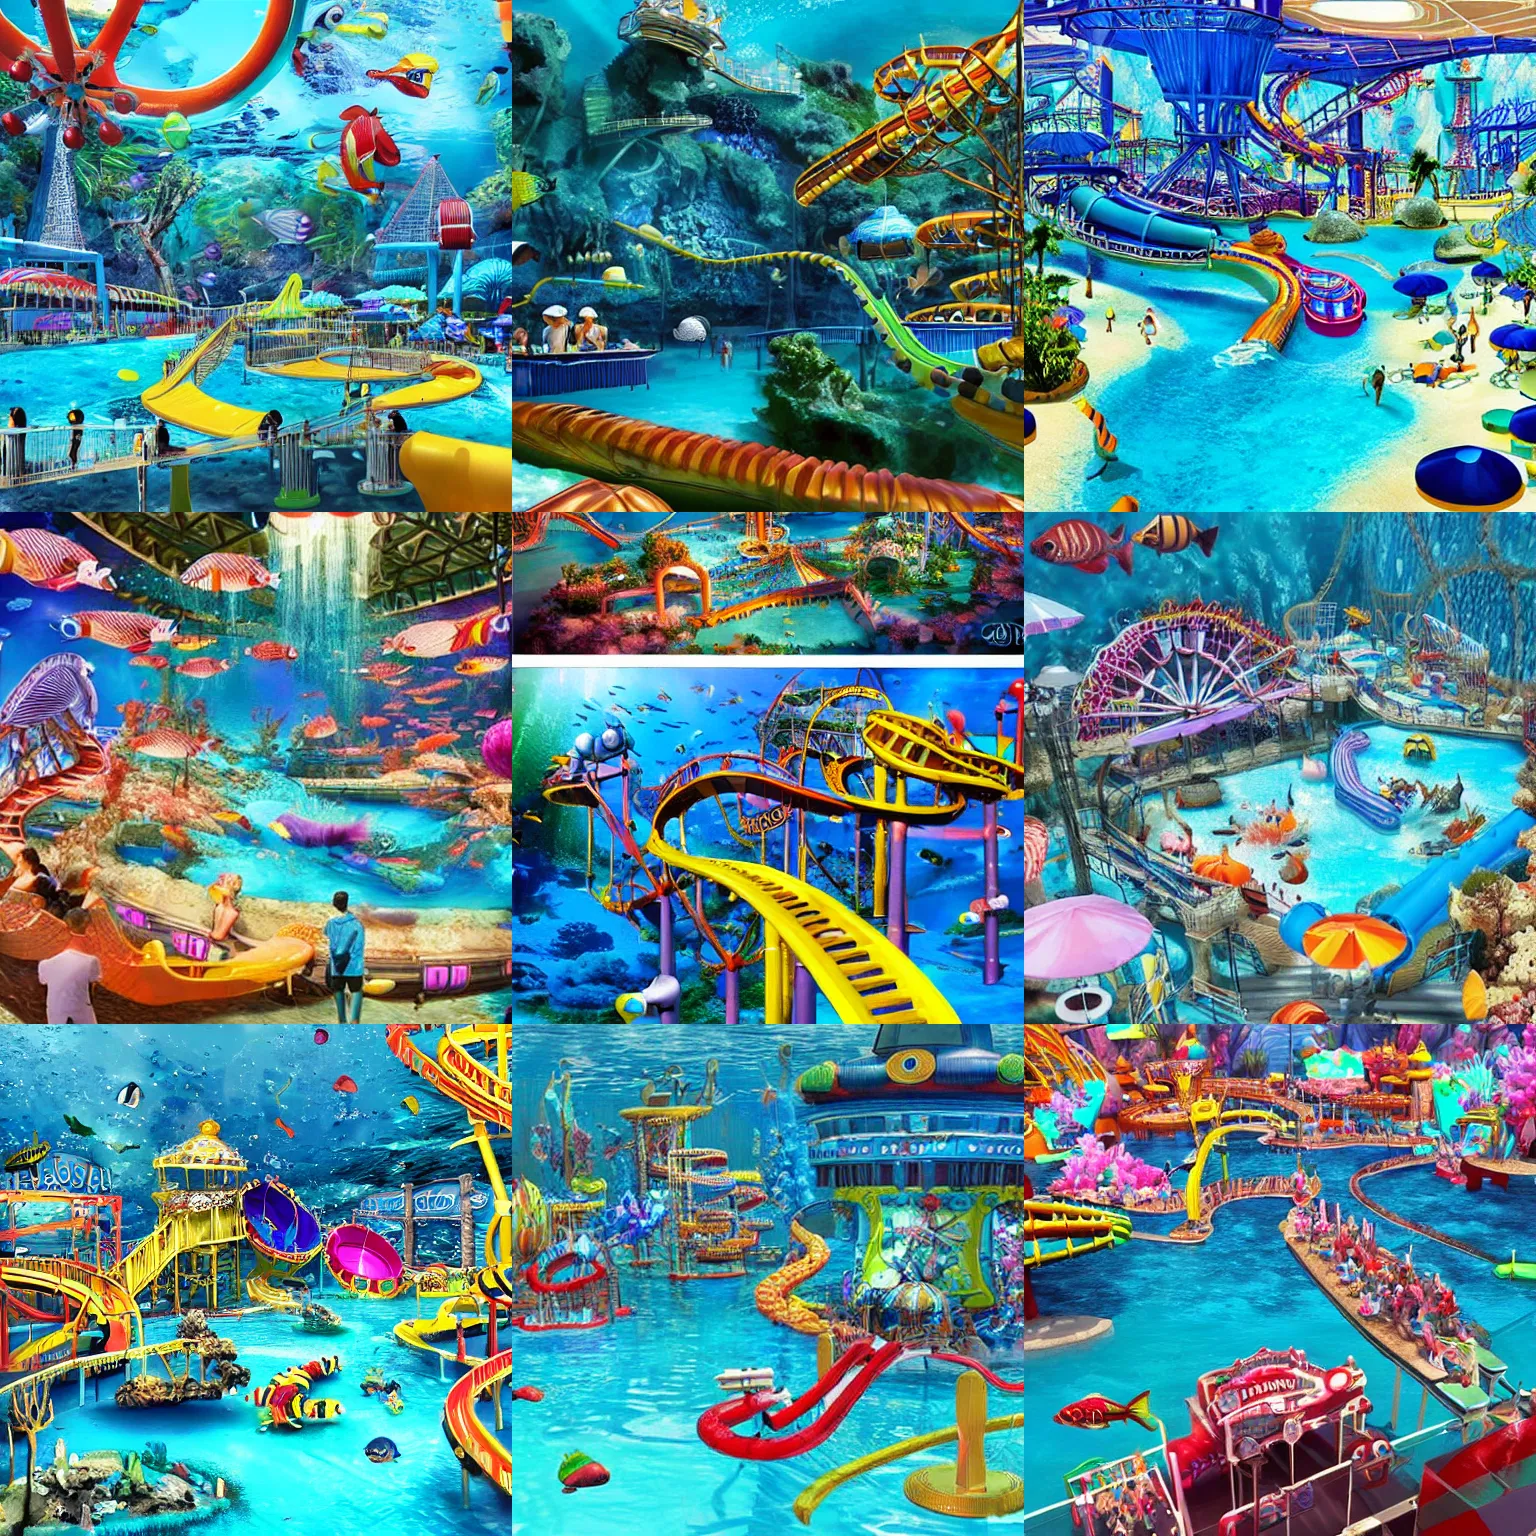 Prompt: an amazing underwater amusement park, photorealistic, detailed